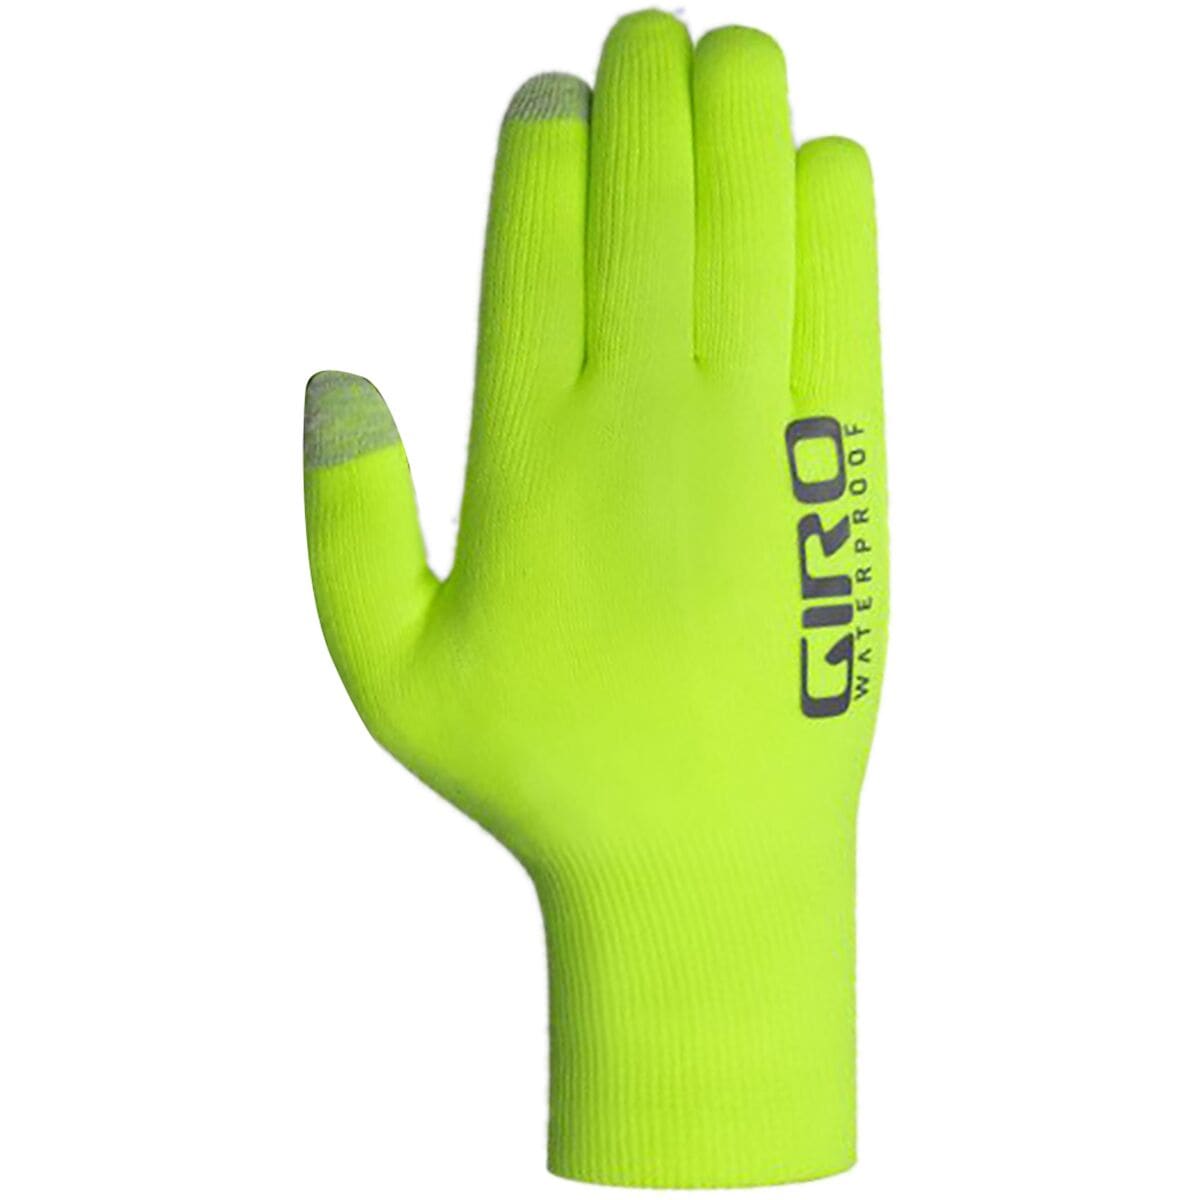 Giro Xnetic H2O Cycling Glove - Men's Highlight Yellow, S